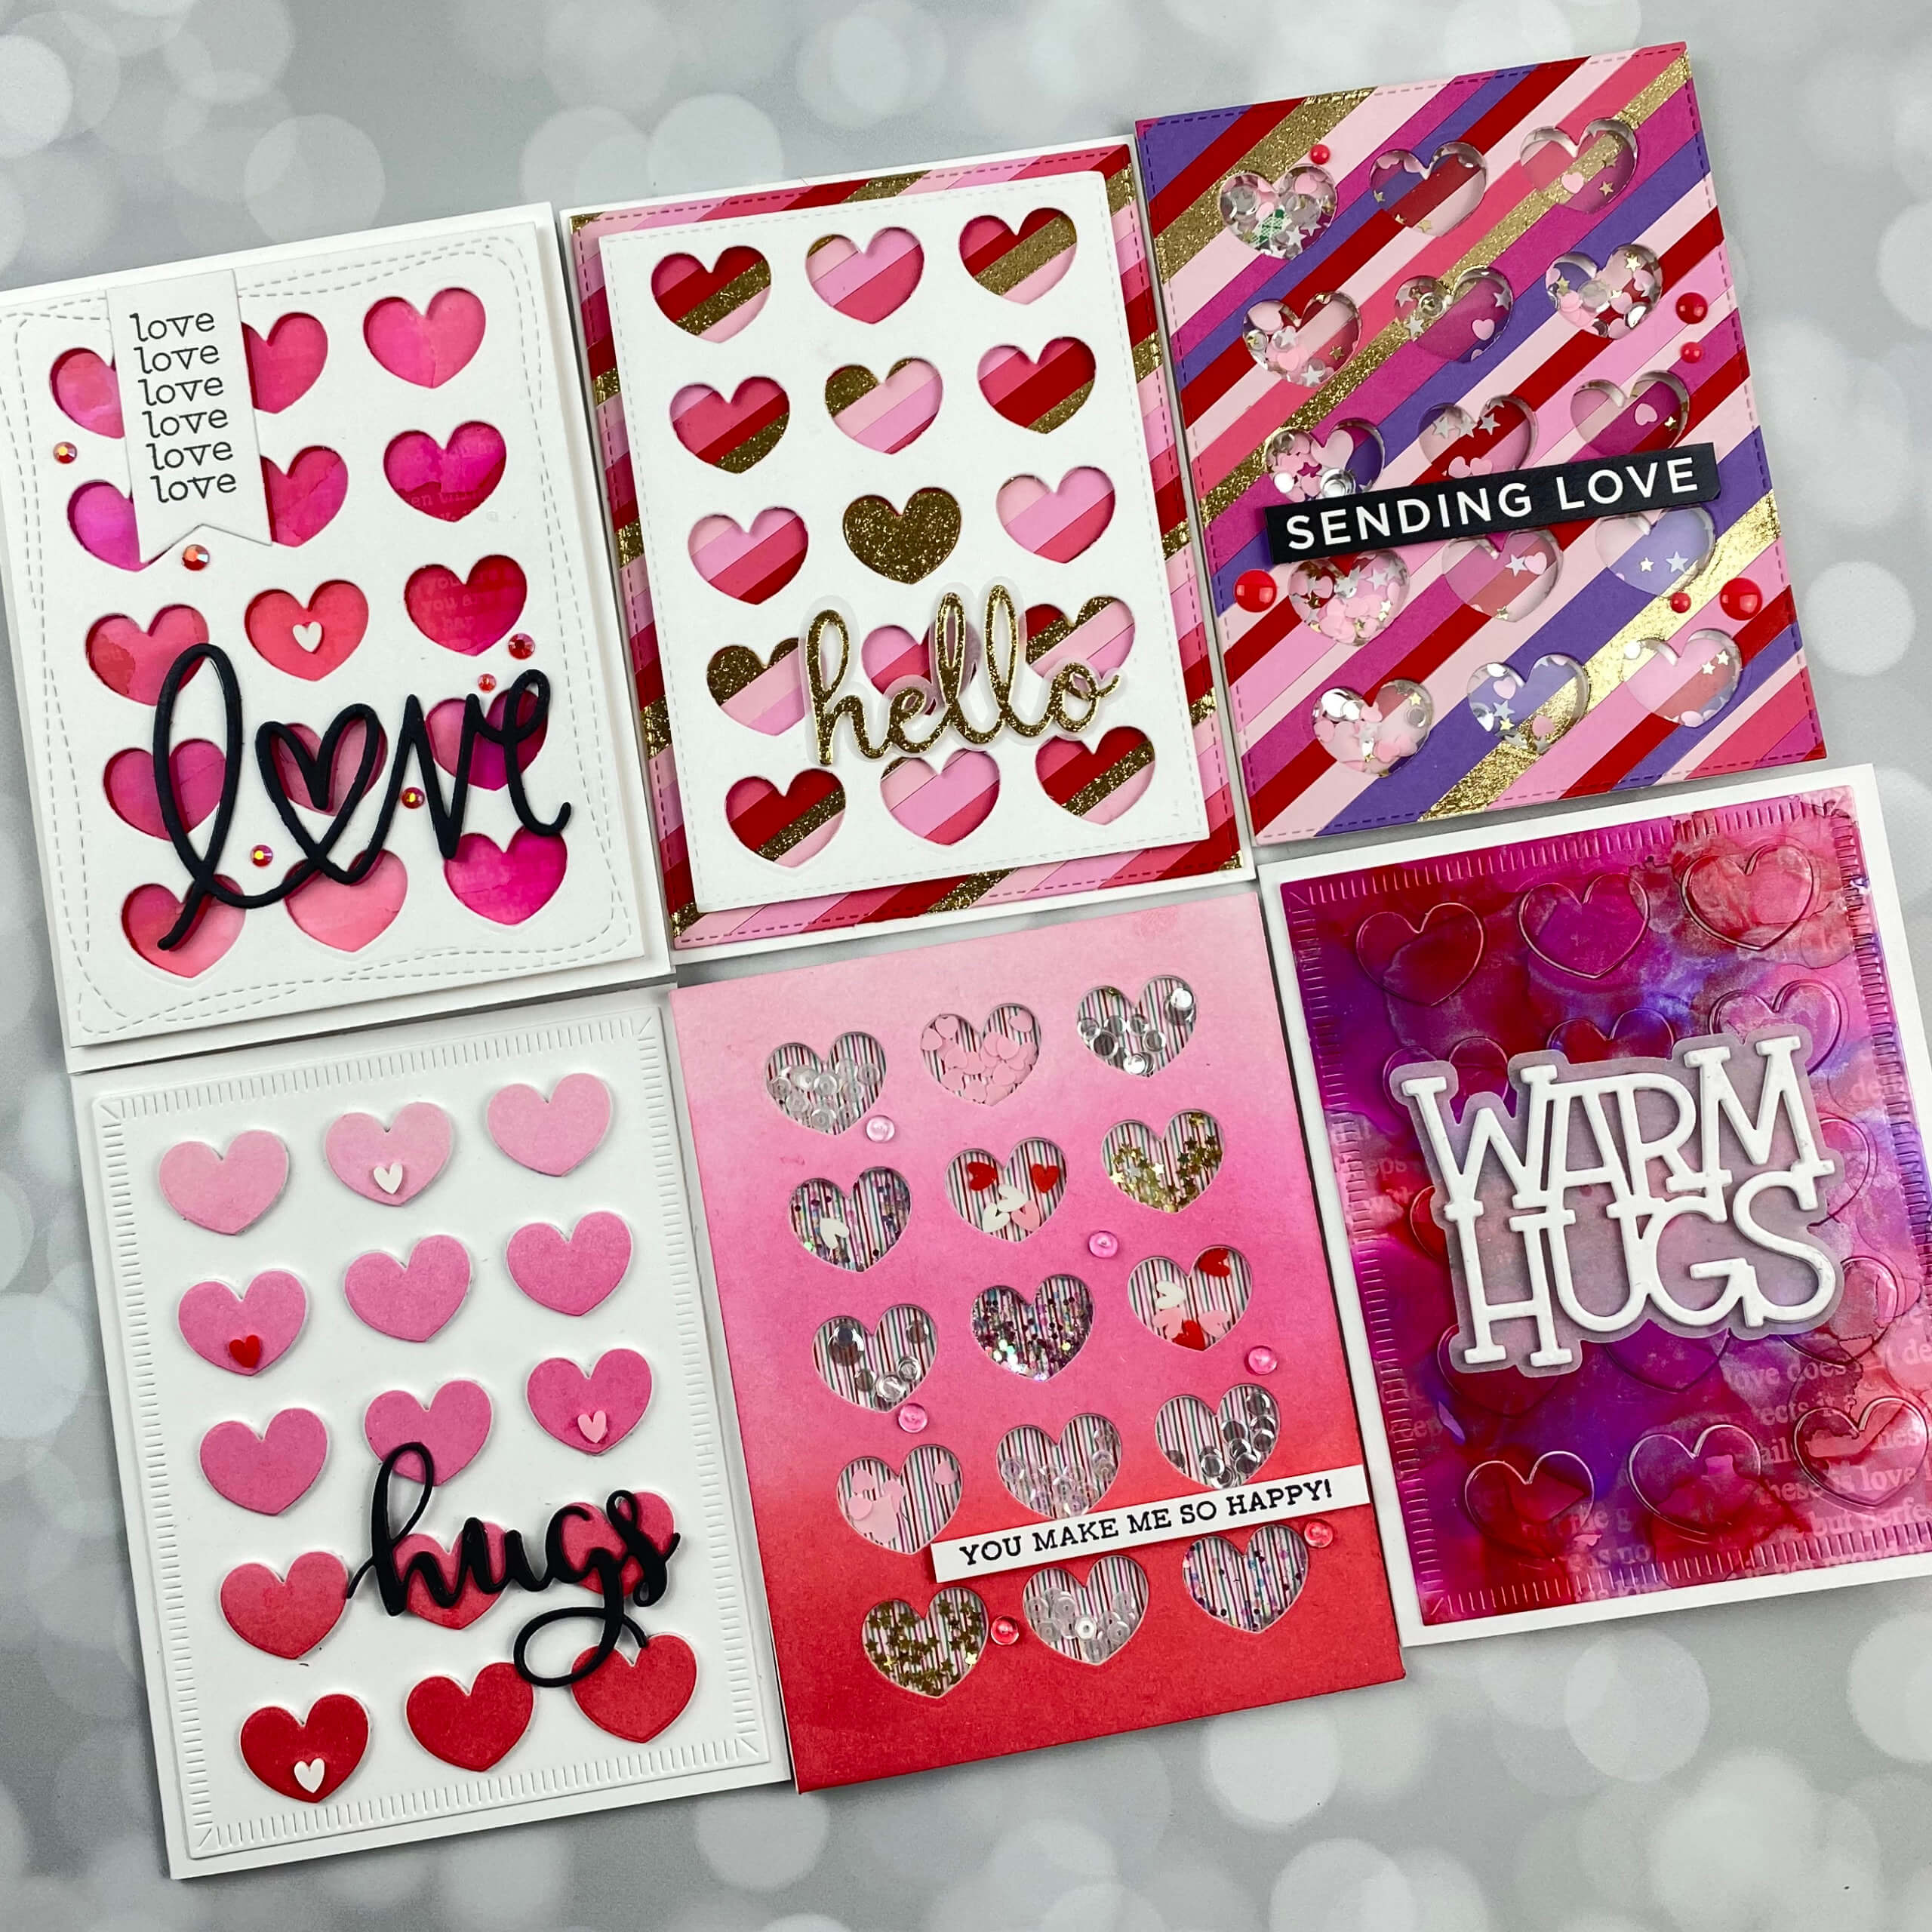 6 handmade valentines card